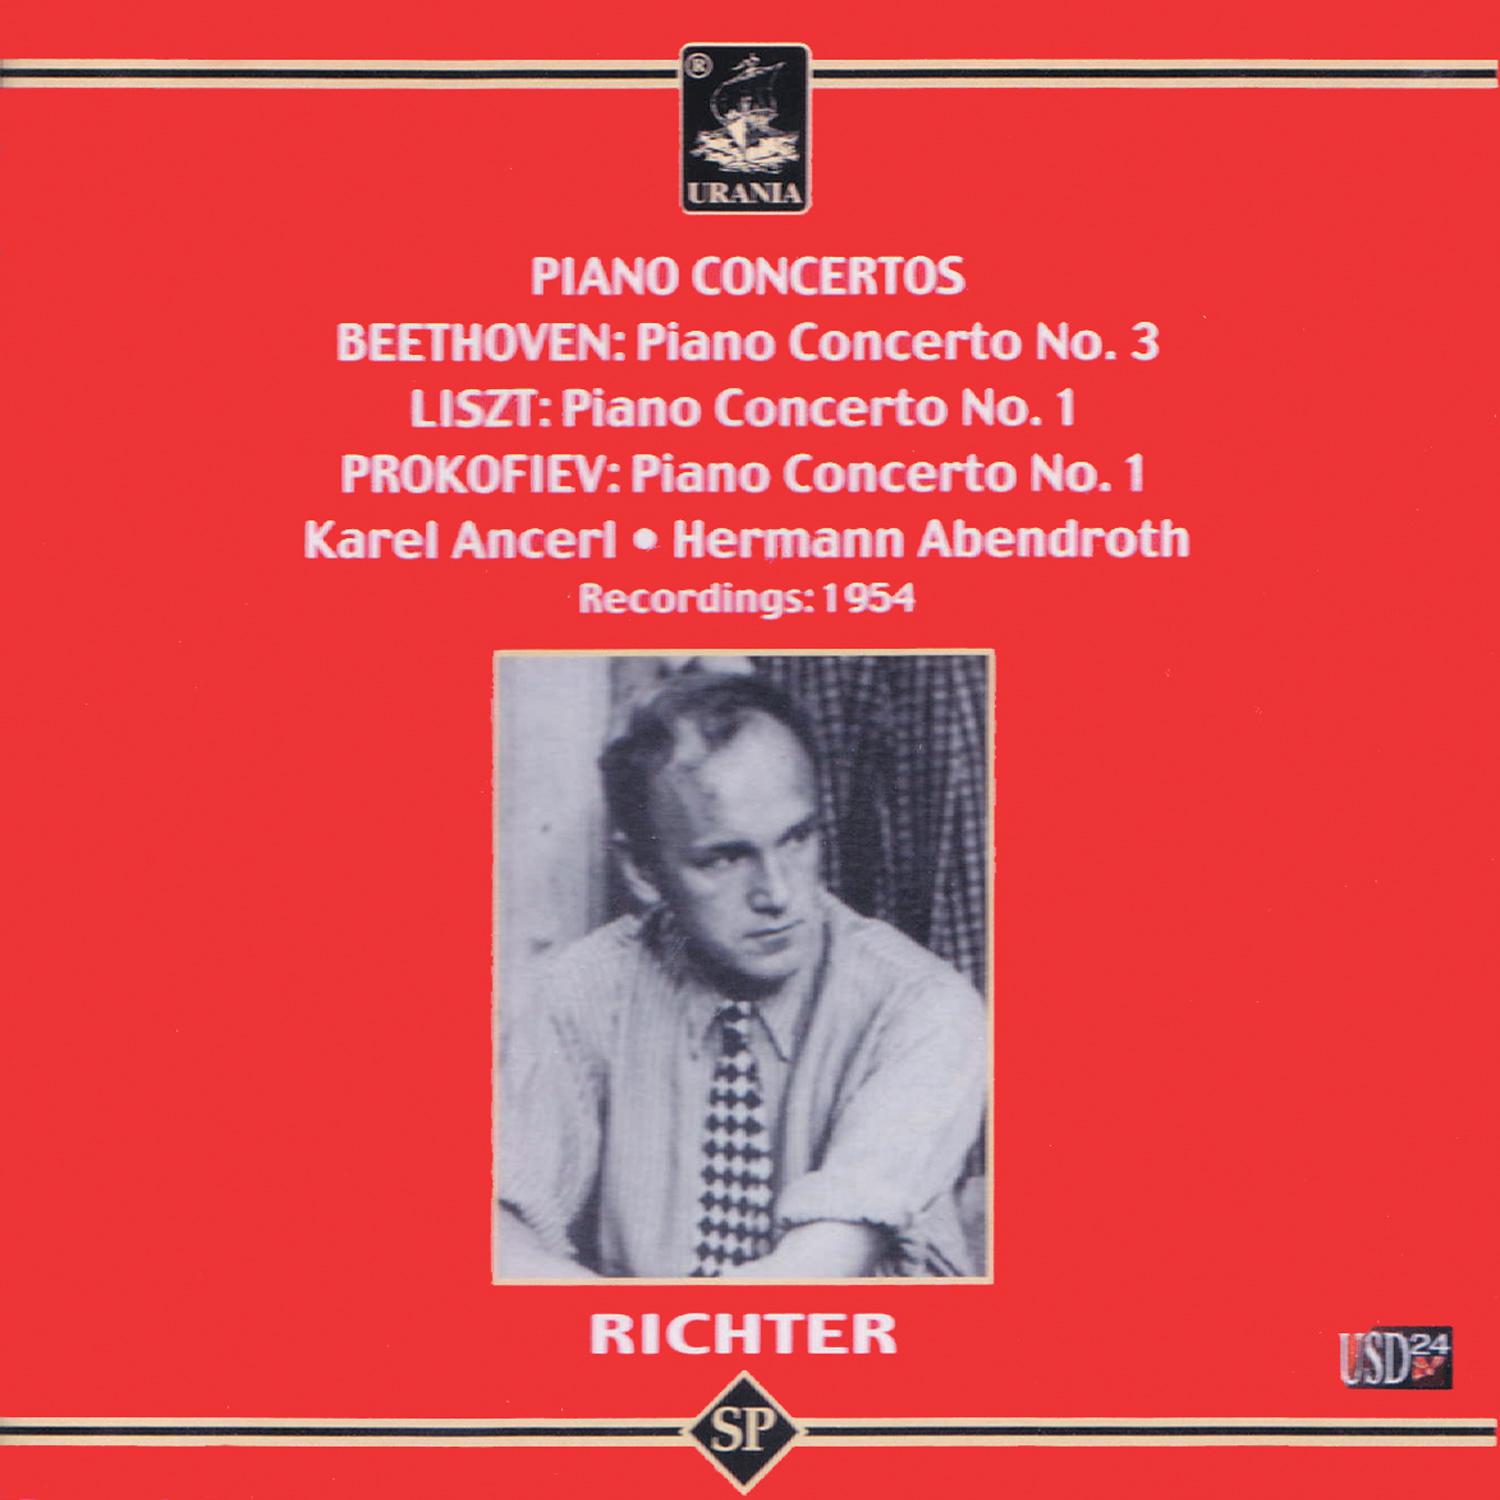 Sviatoslav Richter Plays Piano Concertos专辑